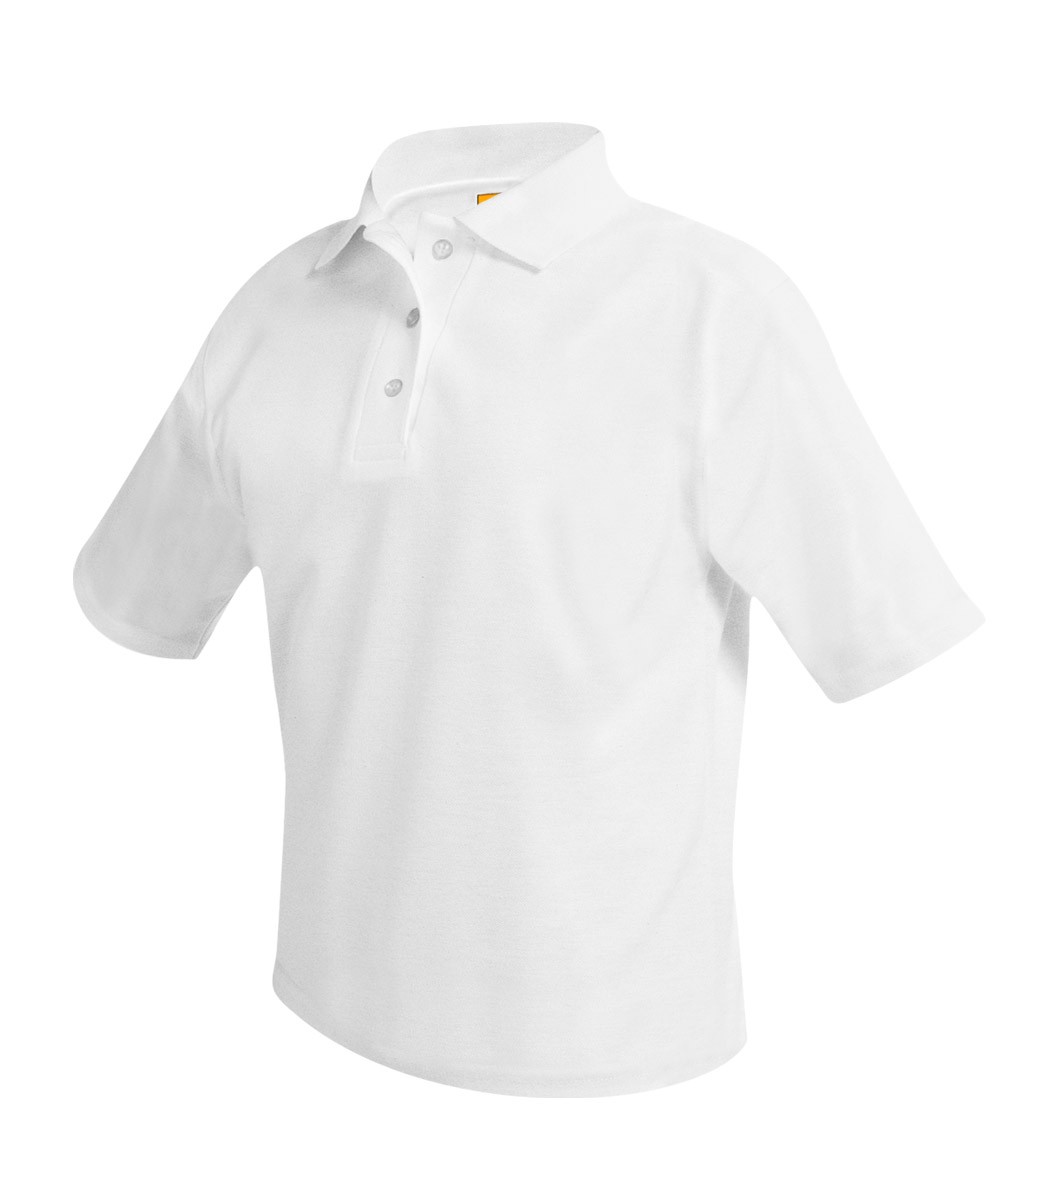 SFA Staff White S/S Polo w/ Crest Logo